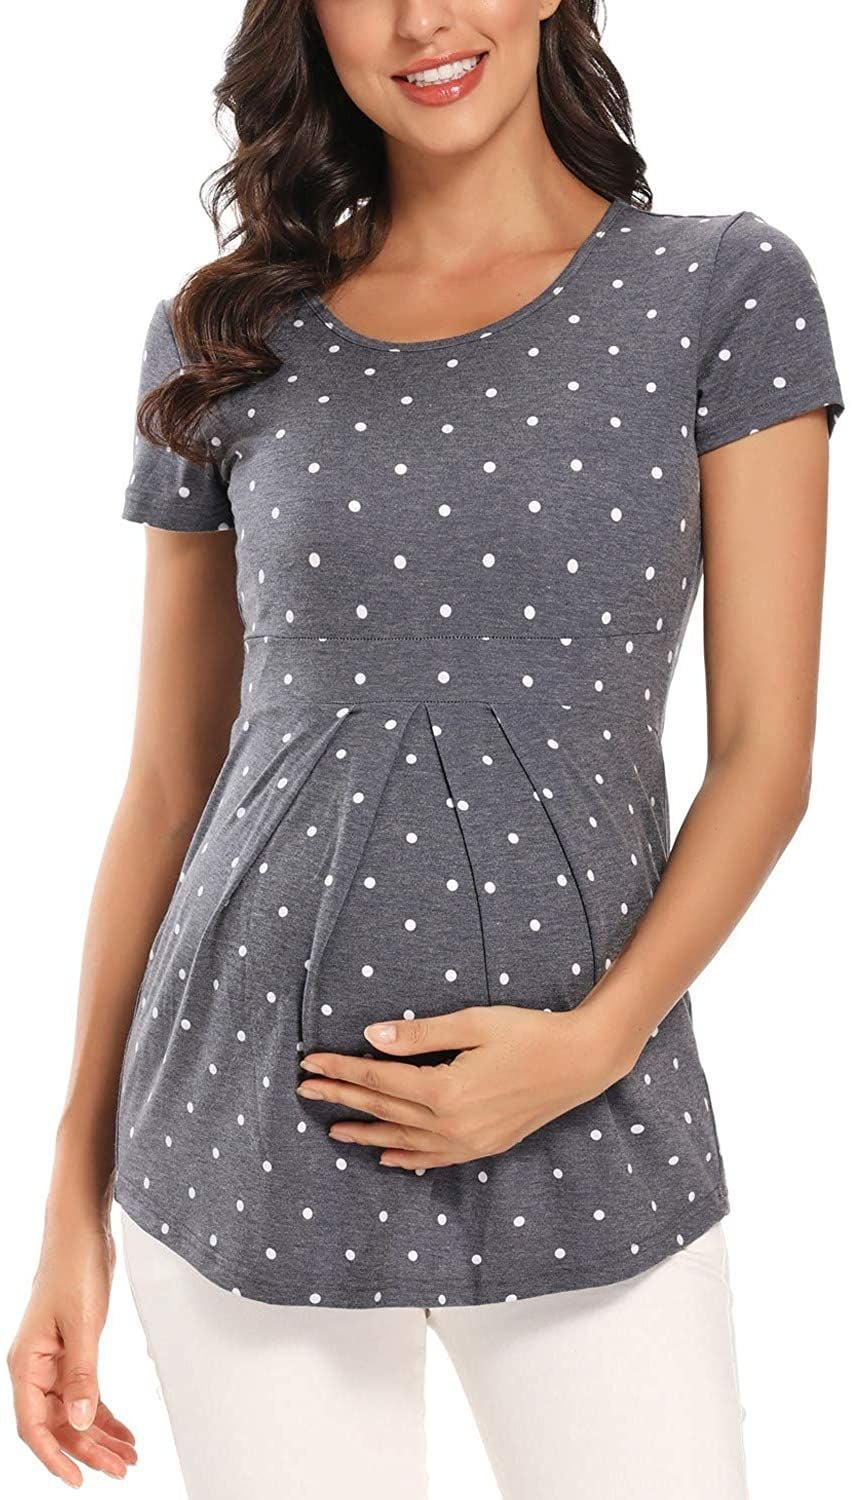 Taqqpue Womens Maternity Tops Maternity T Shirts Short Sleeve